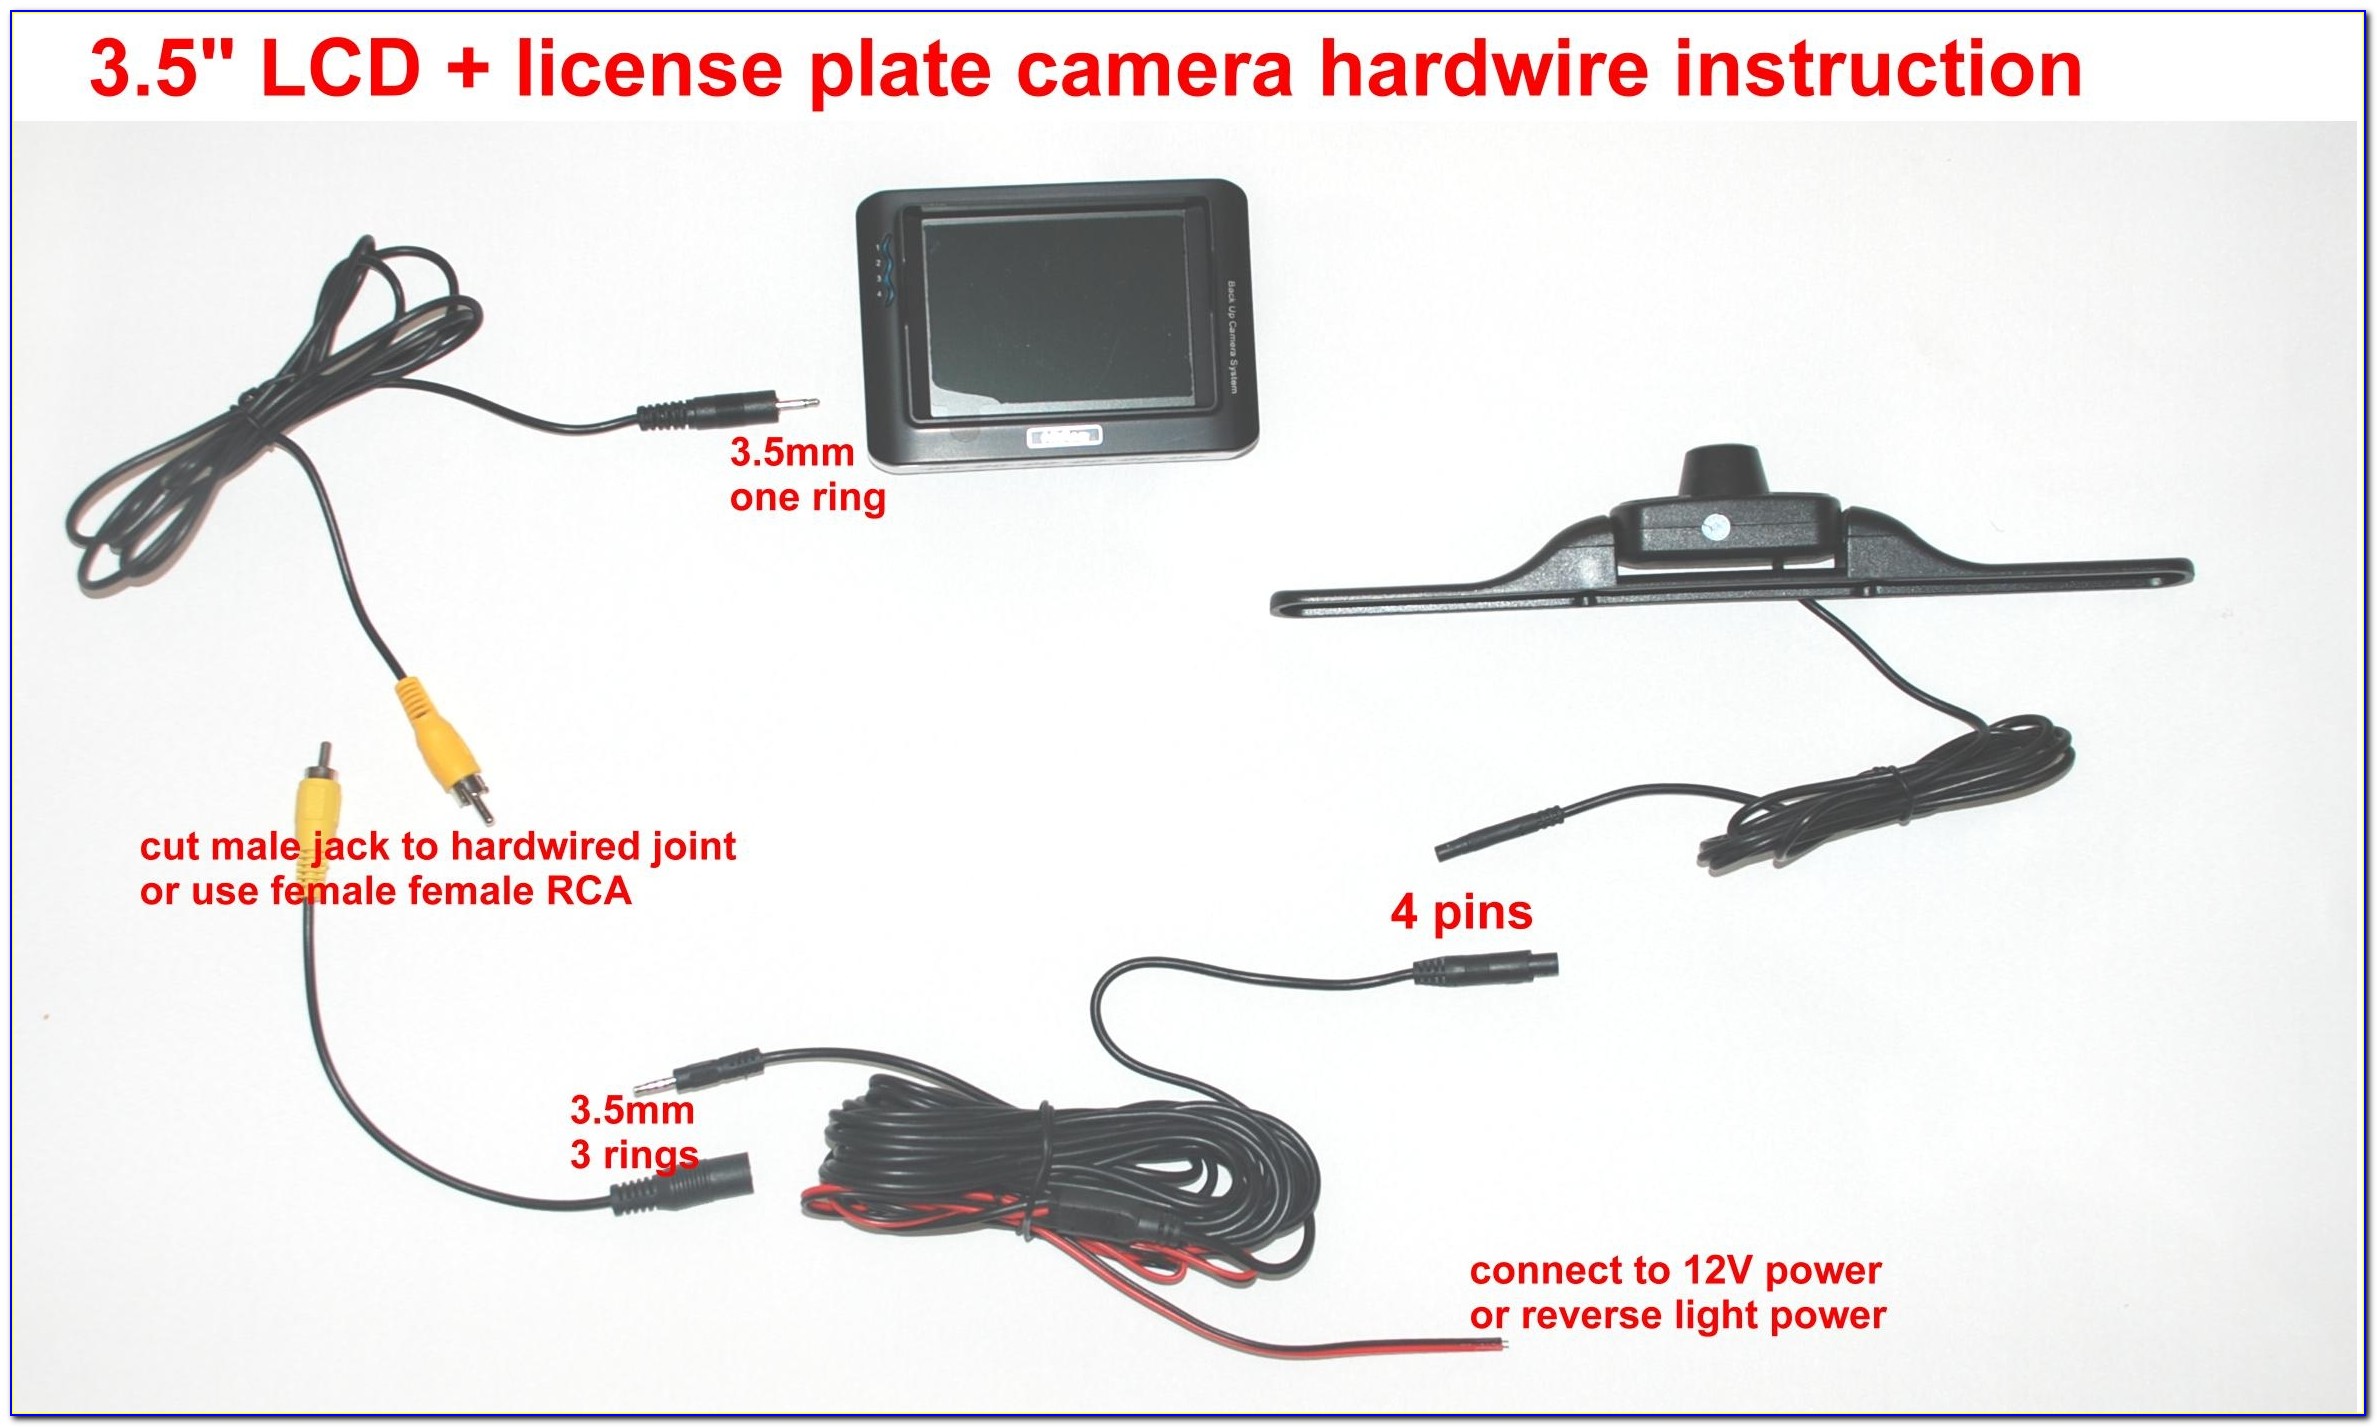 Peak Backup Camera Wiring Diagram